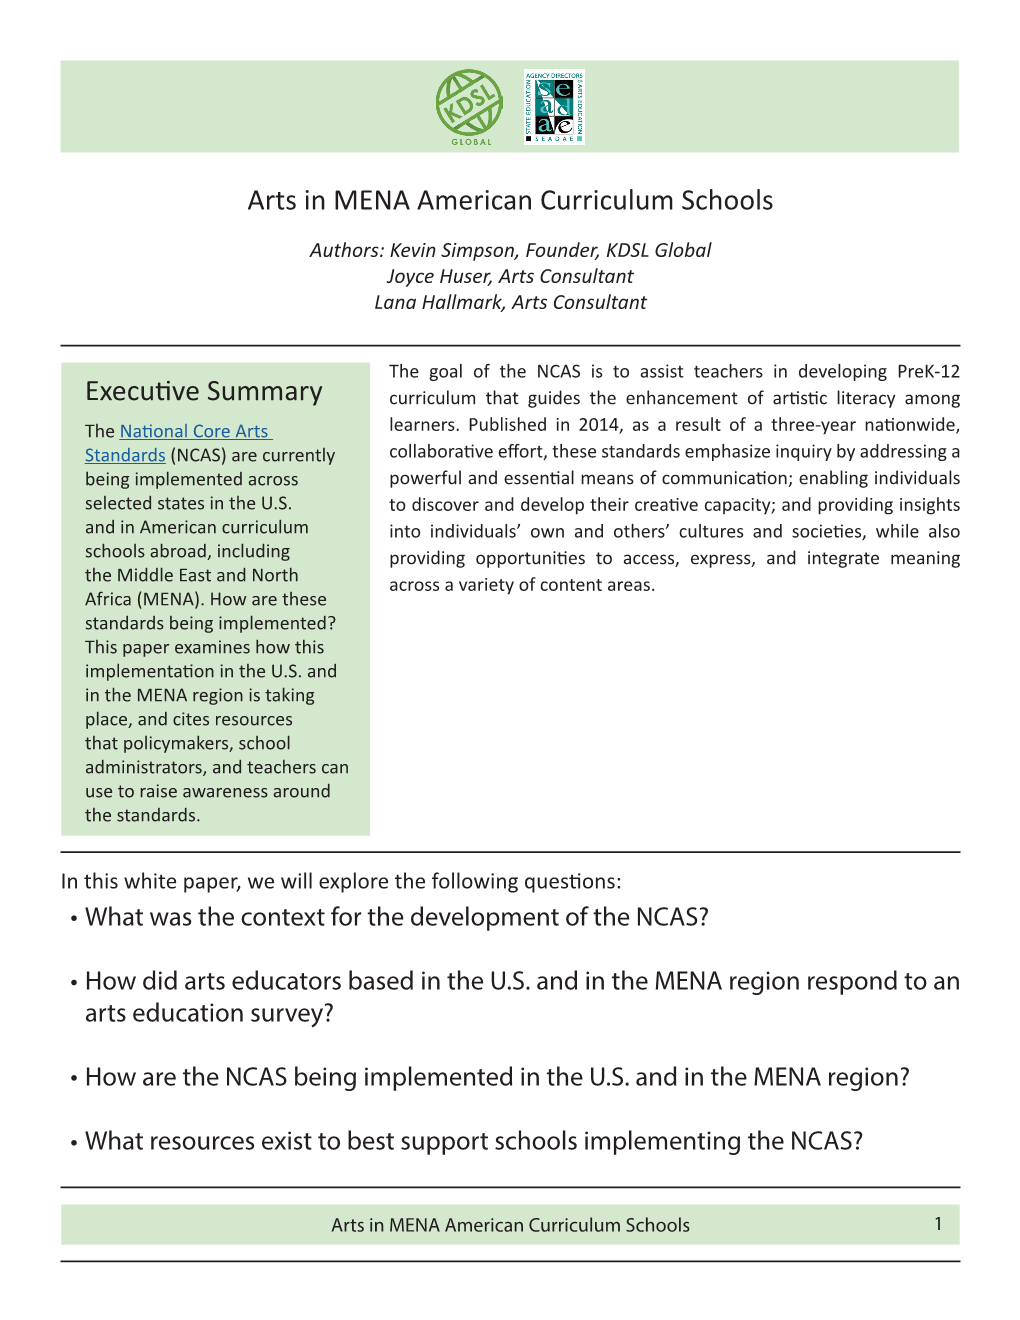 Arts in MENA American Curriculum Schools Executive Summary